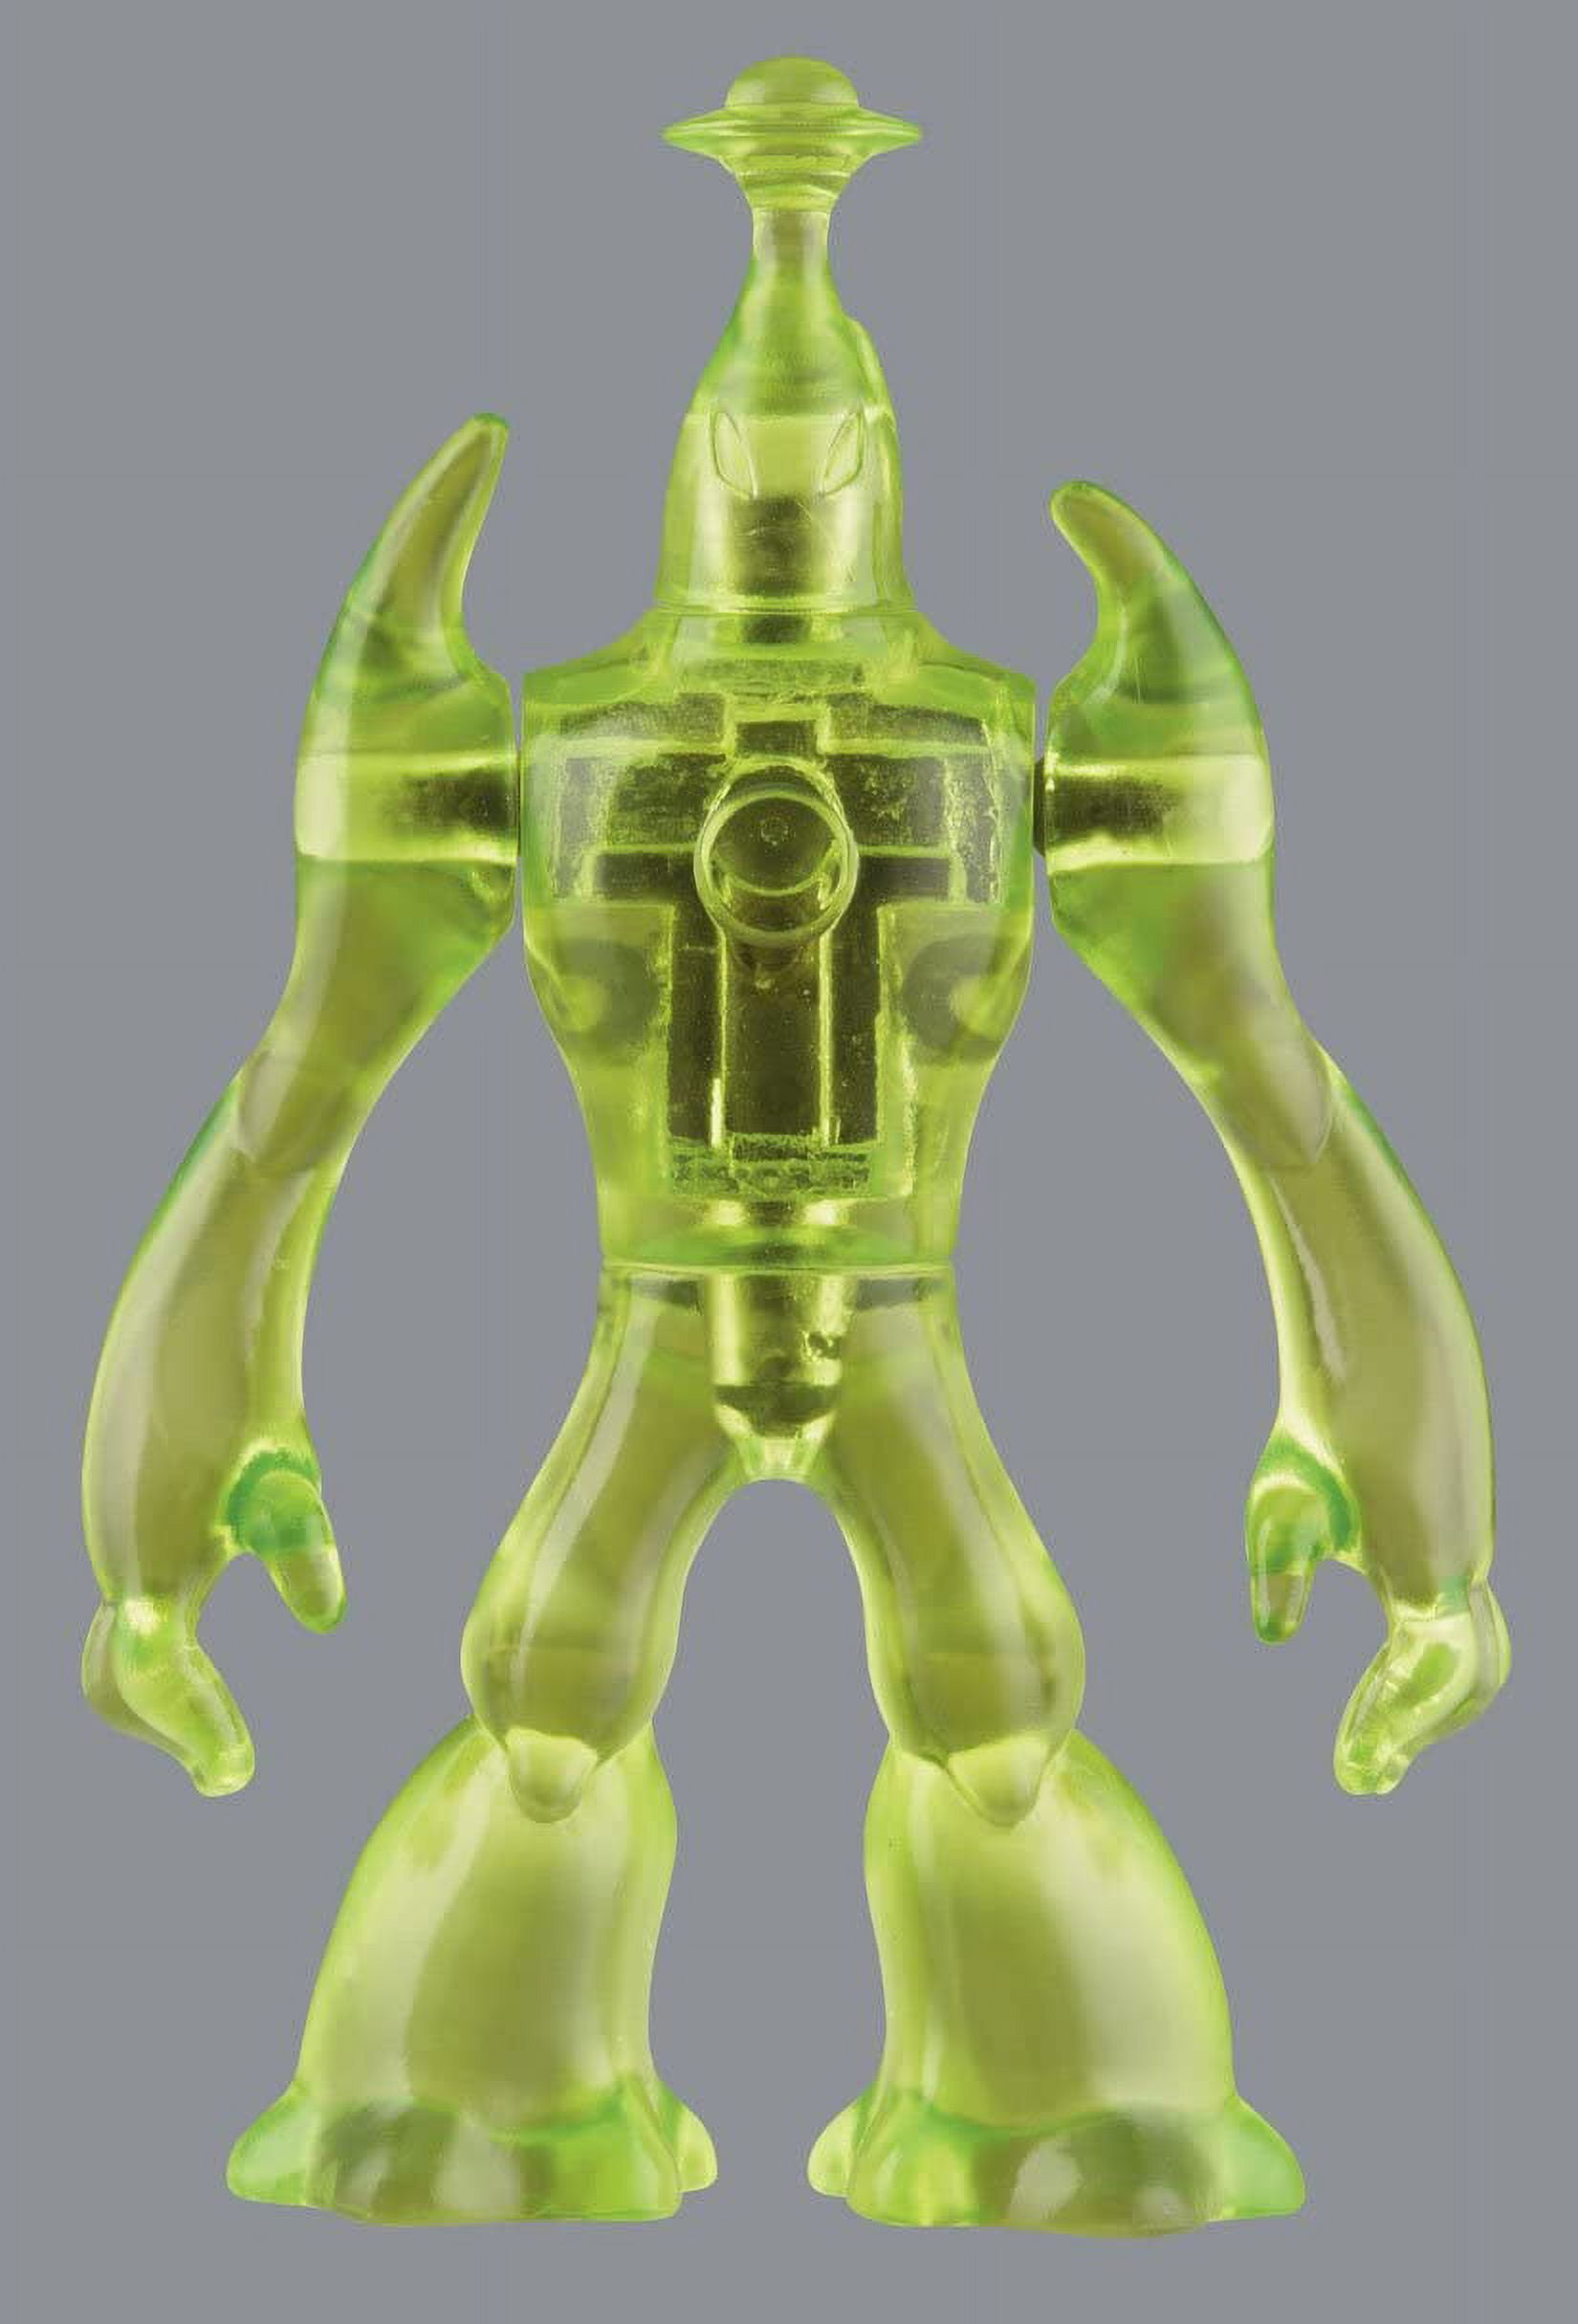 Ben 10 Alien Force Alien X & Goop (2009) Bandai Black Creation Transporter  Figure Toy - (A) 